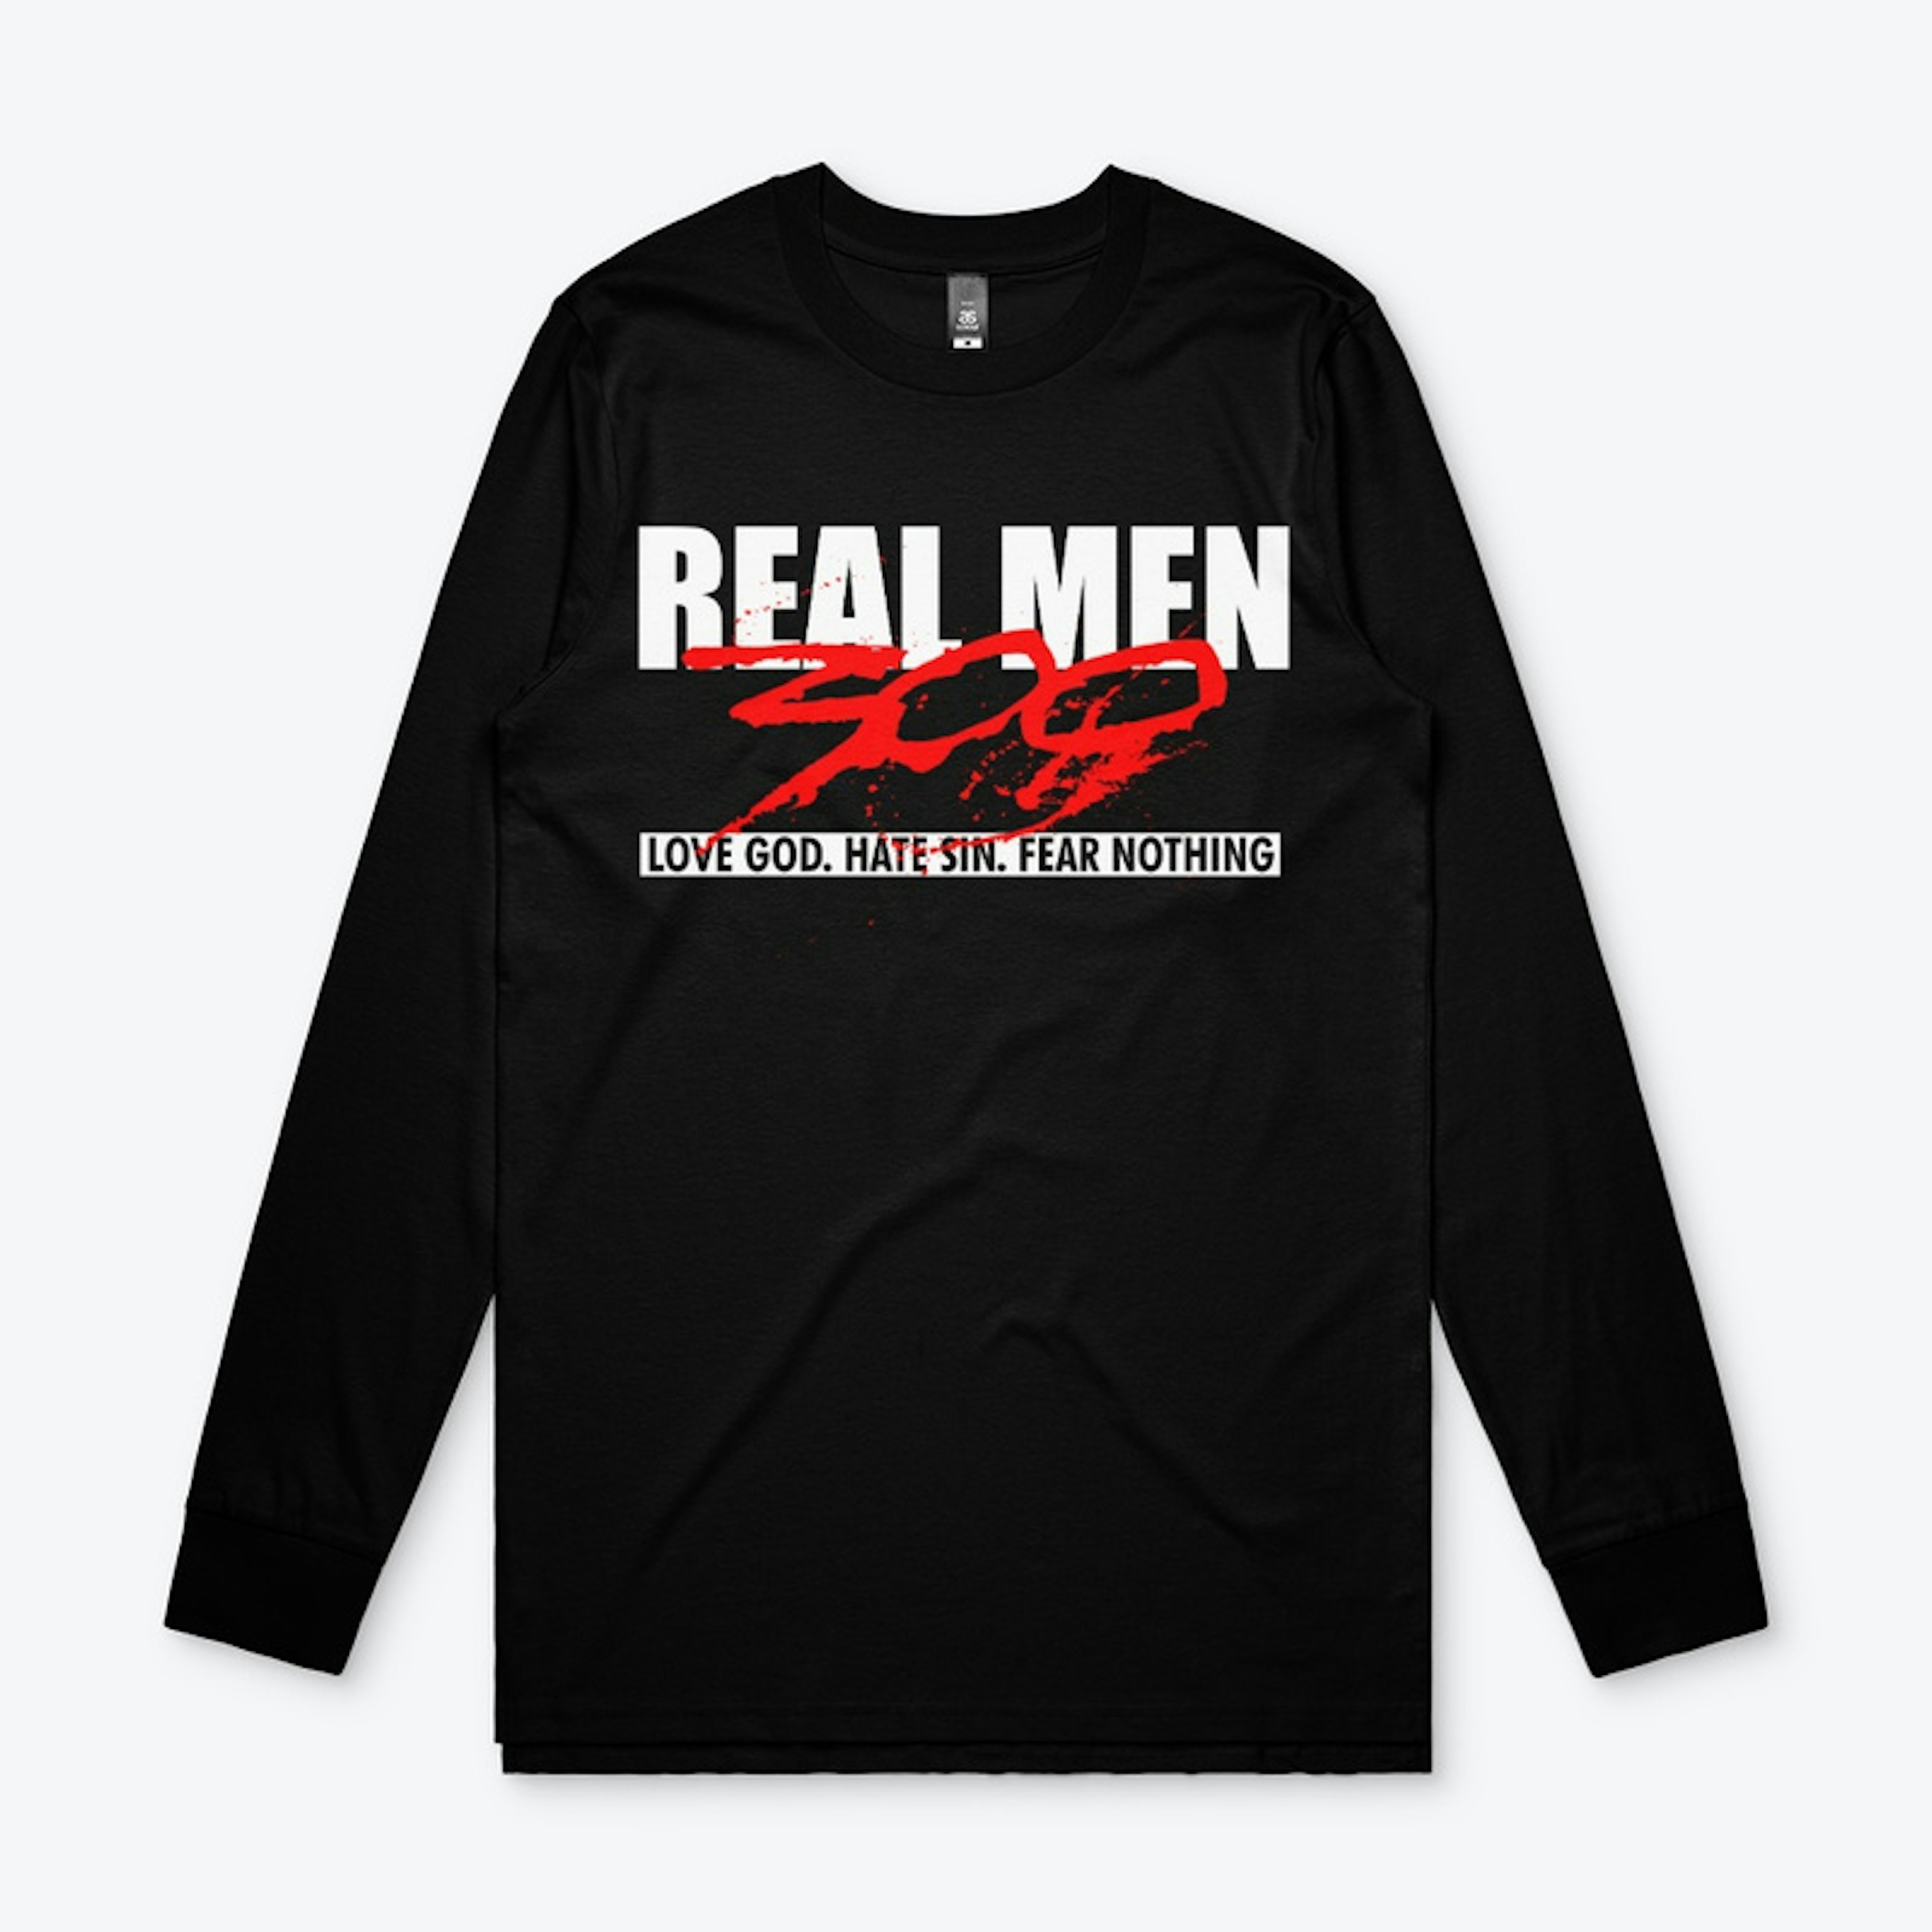 Real Men Gear